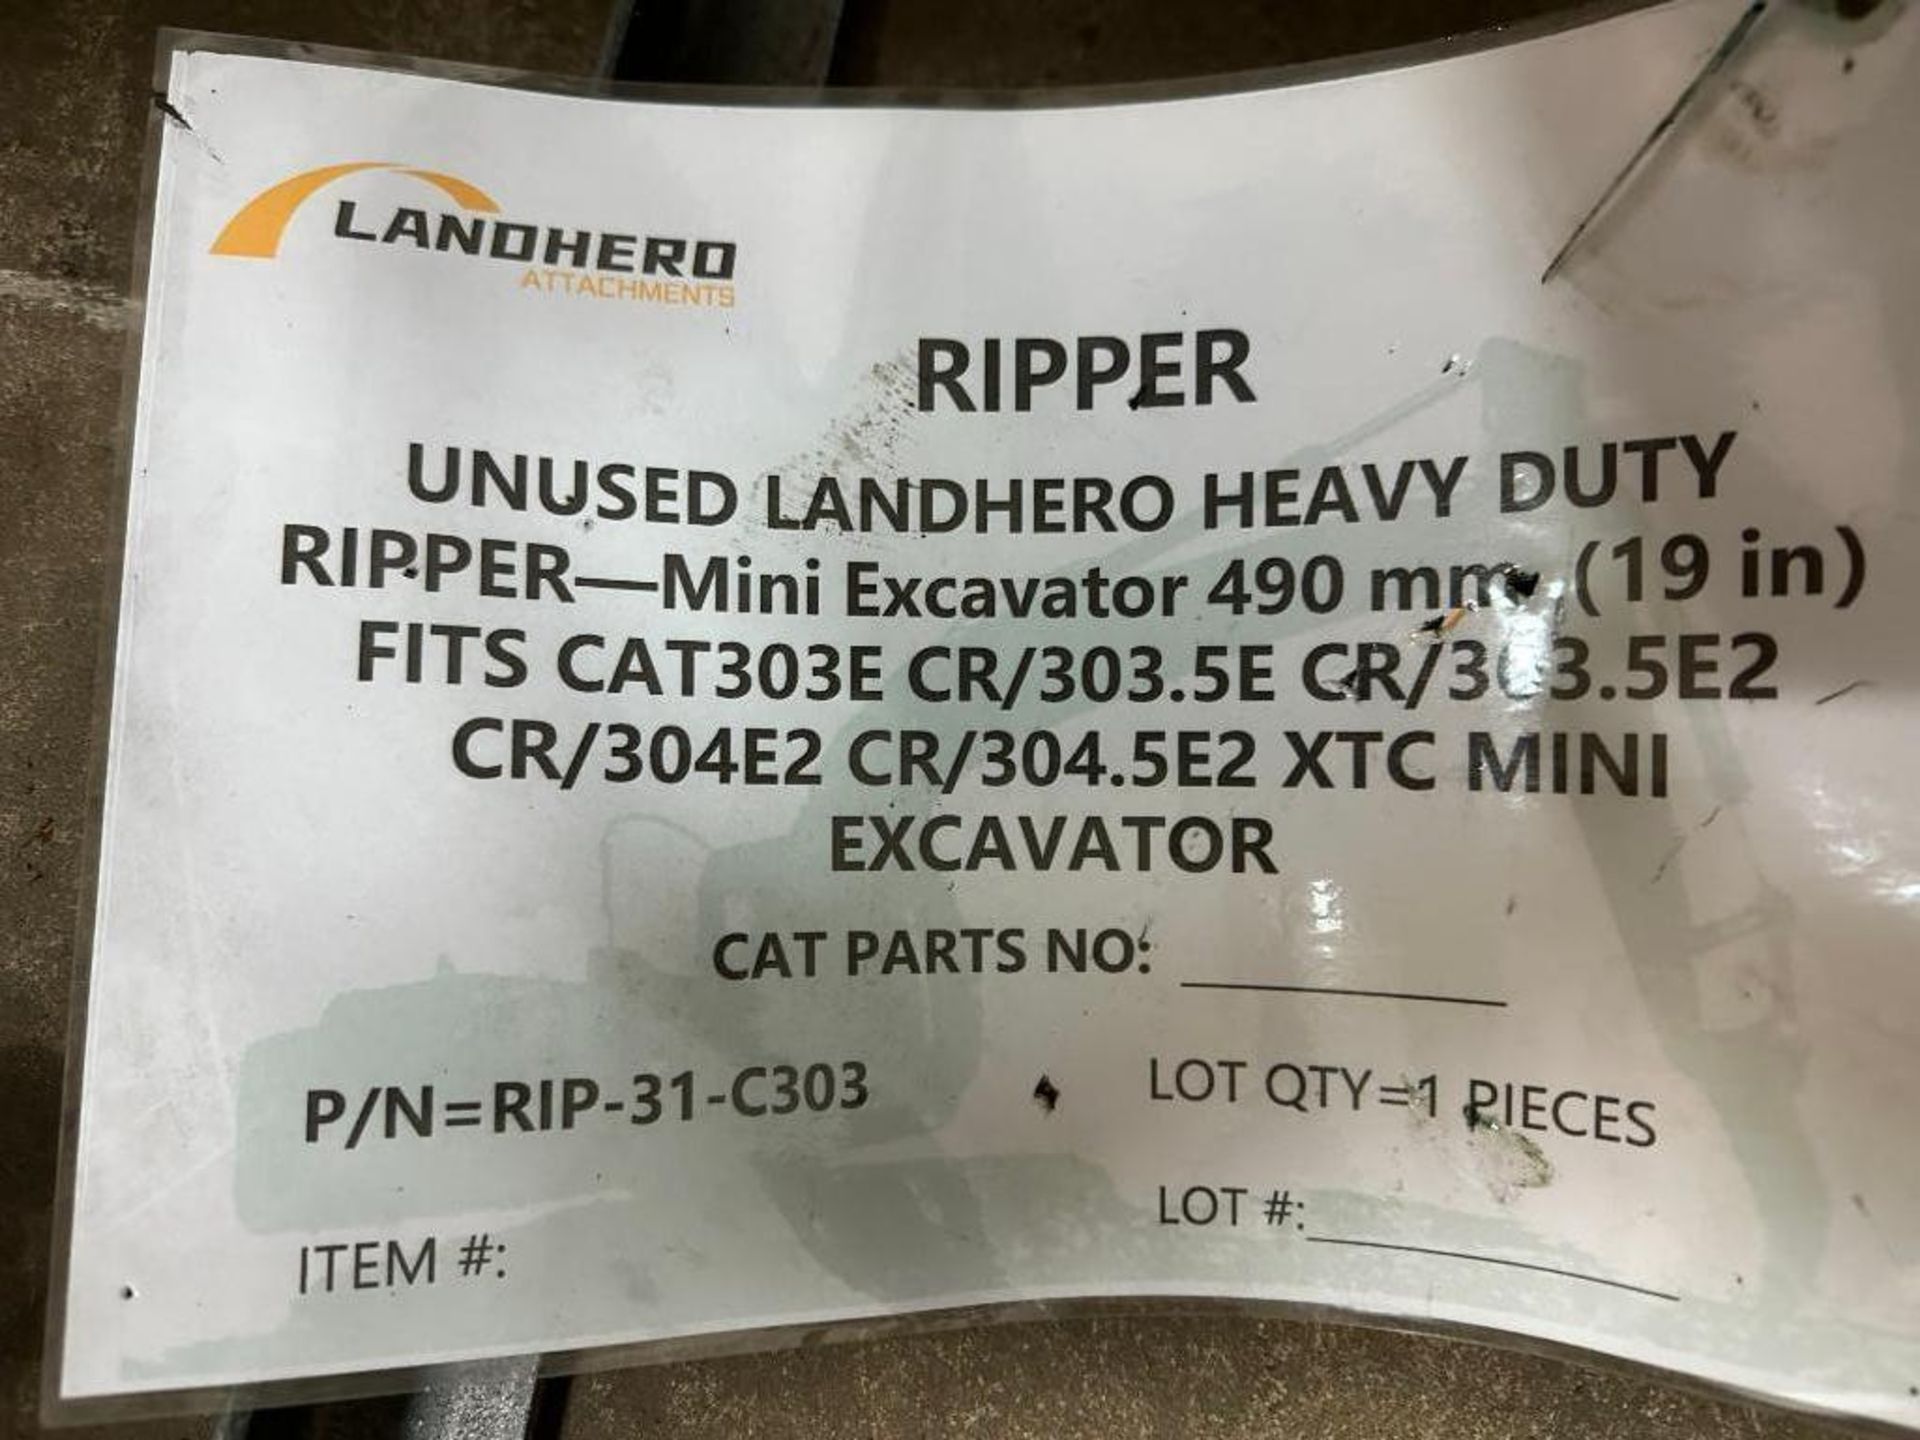 LAND HONOR 19" HEAVY DUTY RIPPER MINI EXCAVATOR ATTACHMENT BRAND/MODEL: LANDHONER RIP-31-C307/308 IN - Image 5 of 6